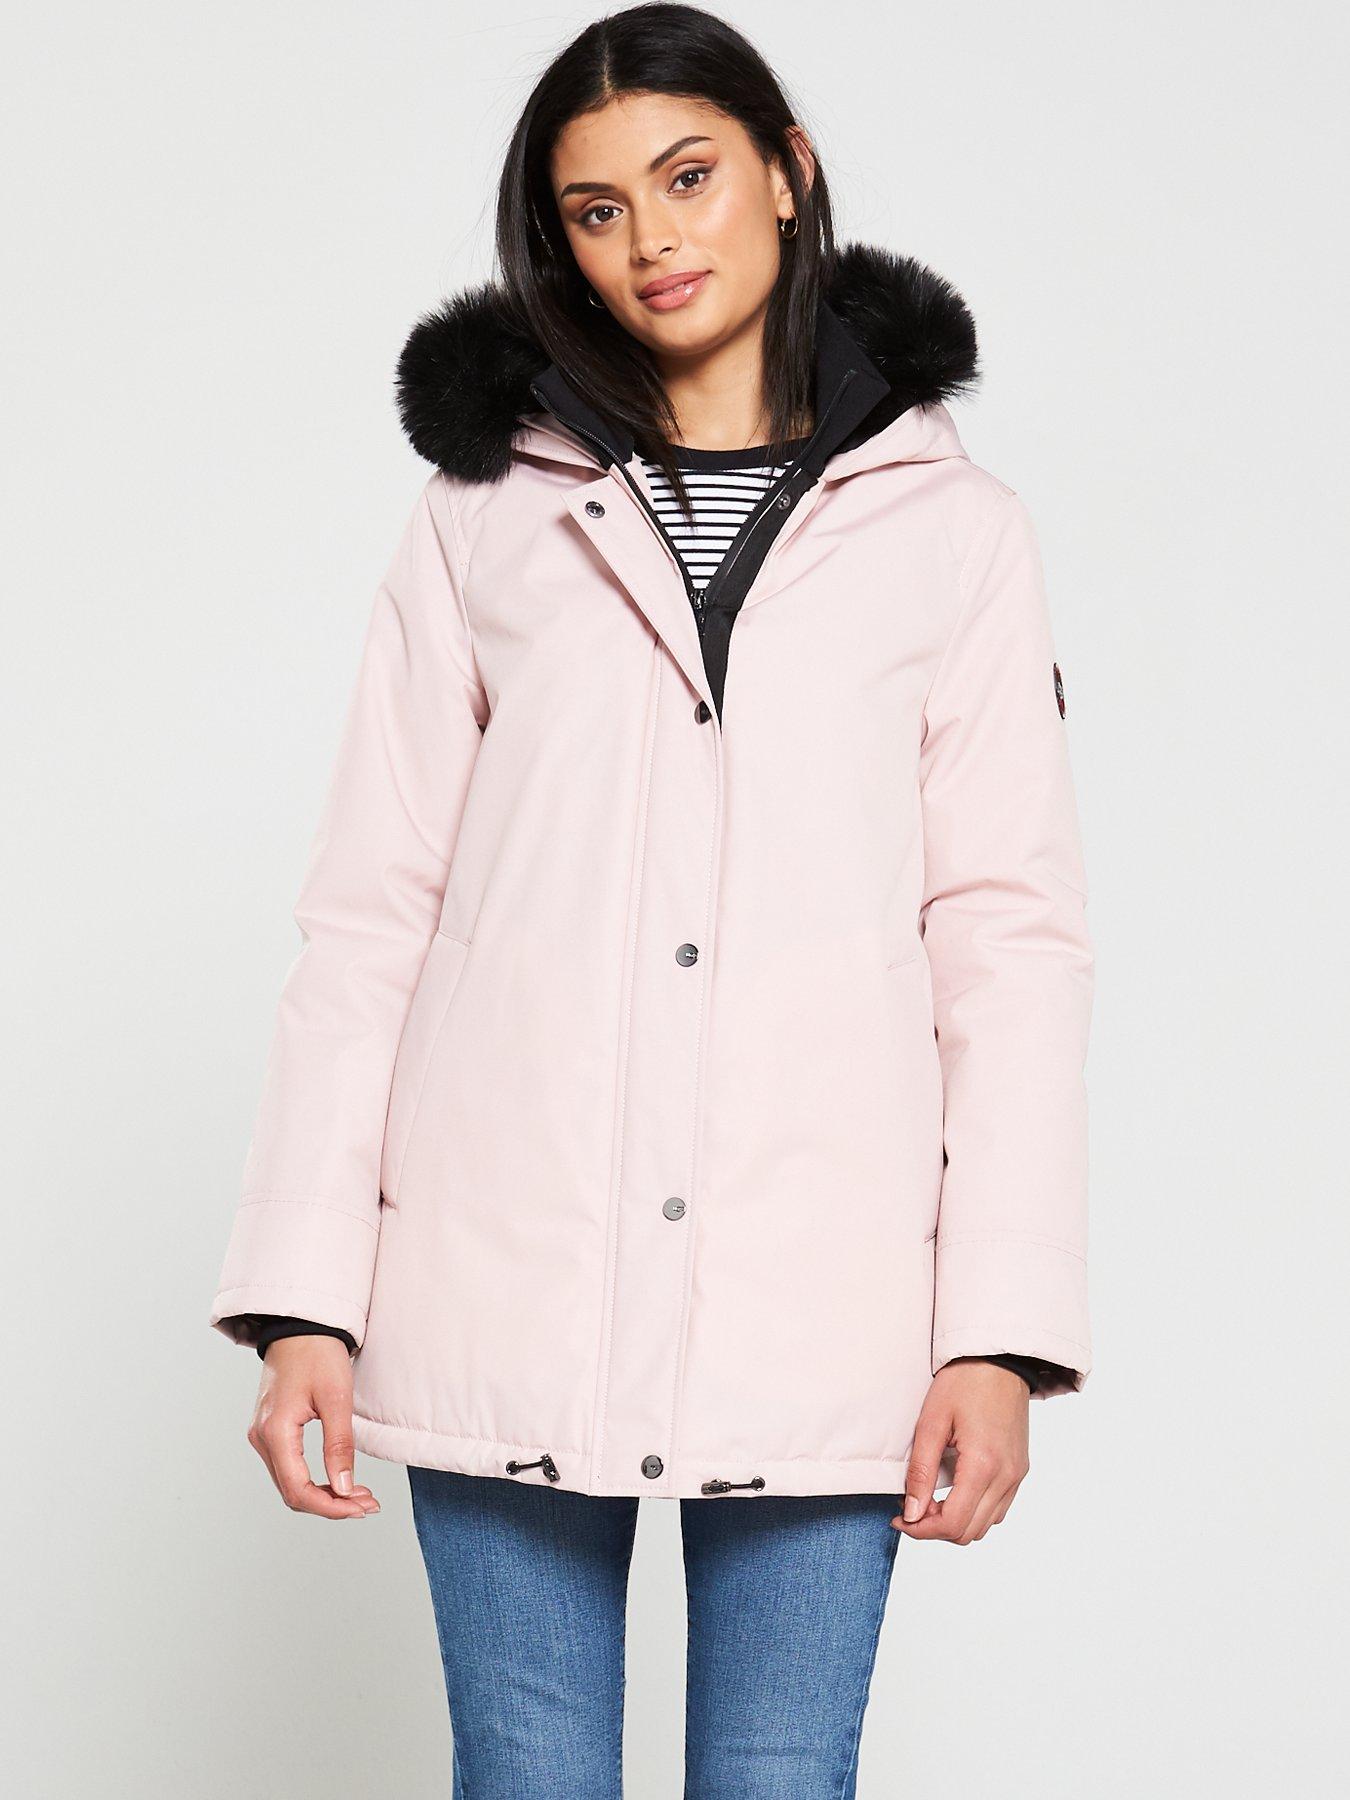 ugg pink jacket